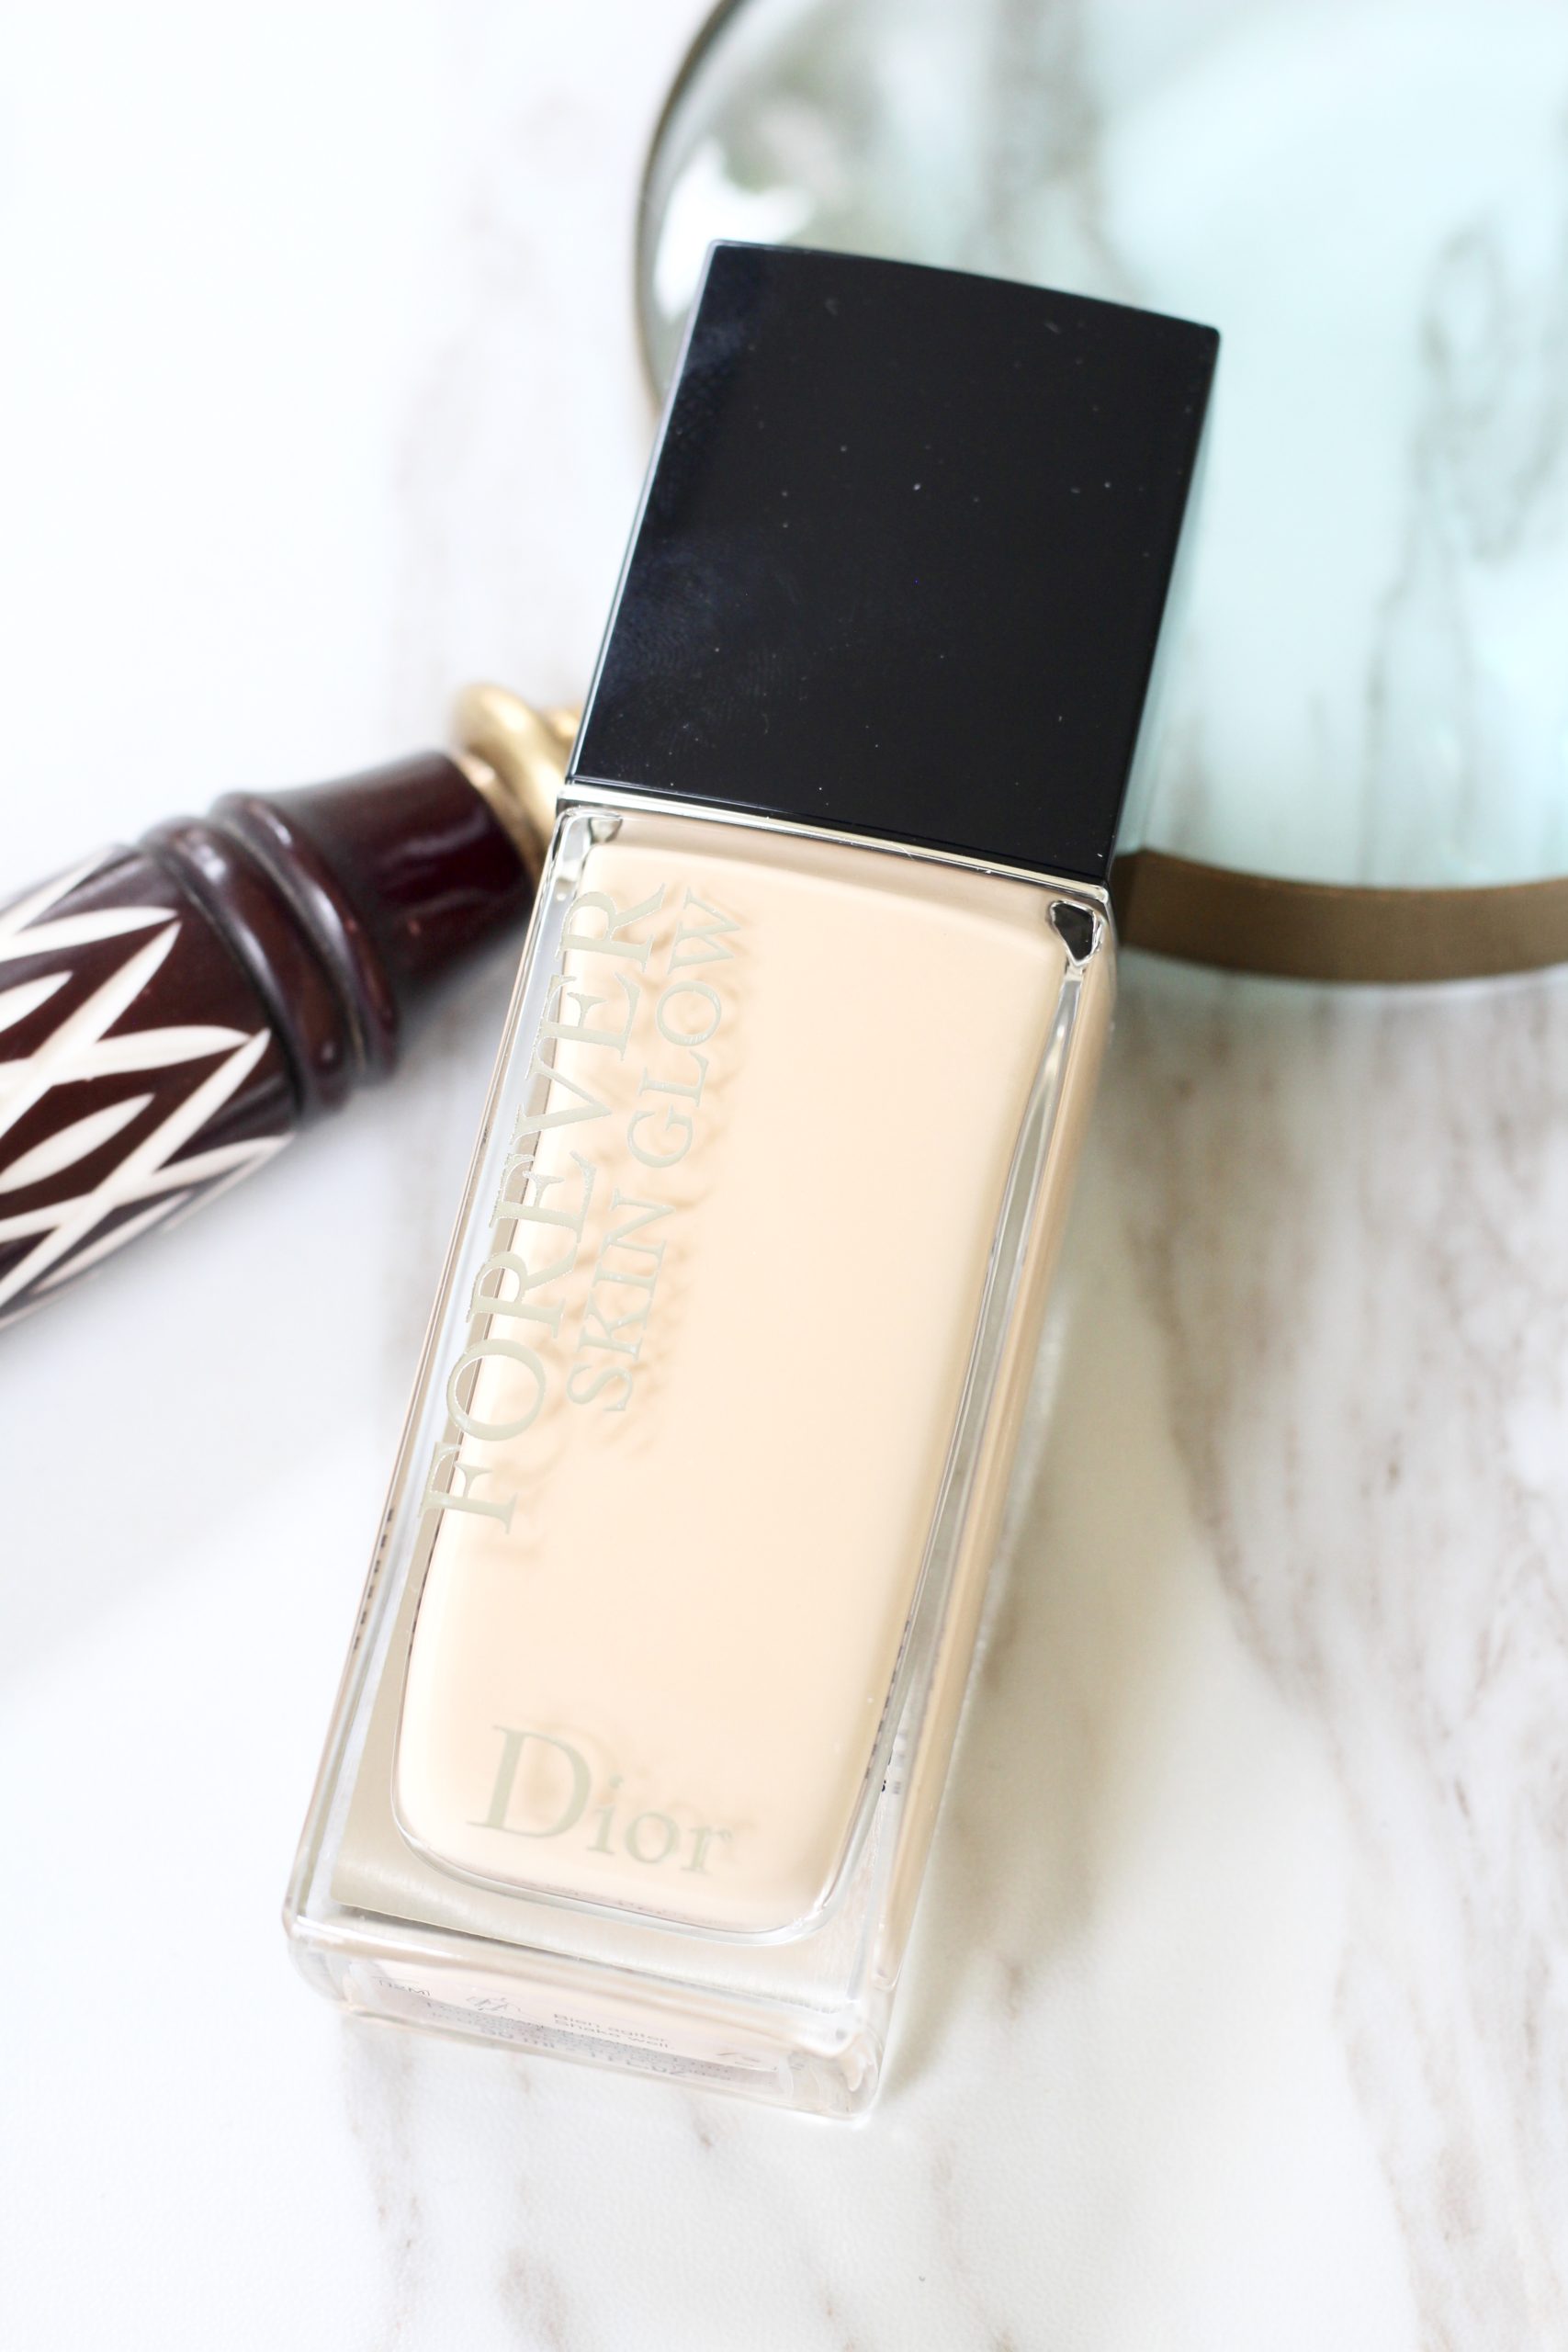 Dior Forever Skin Glow Foundation 